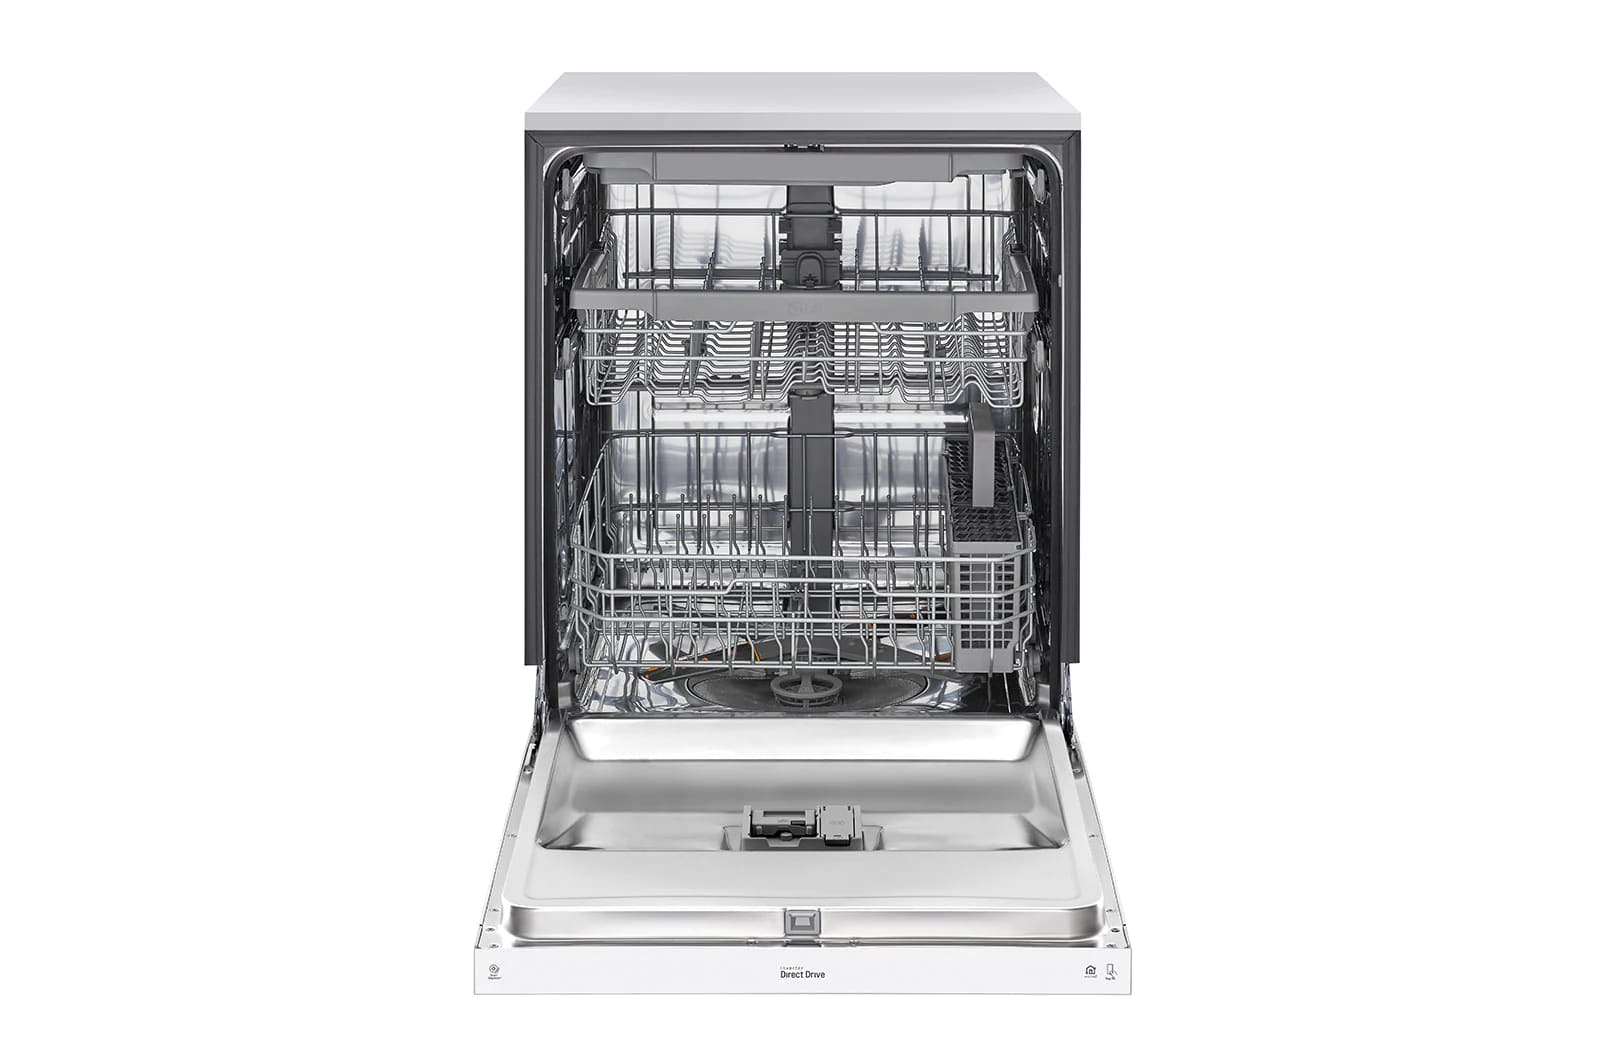 LG - 48 dBA Built In Dishwasher in White - LDFN4542W